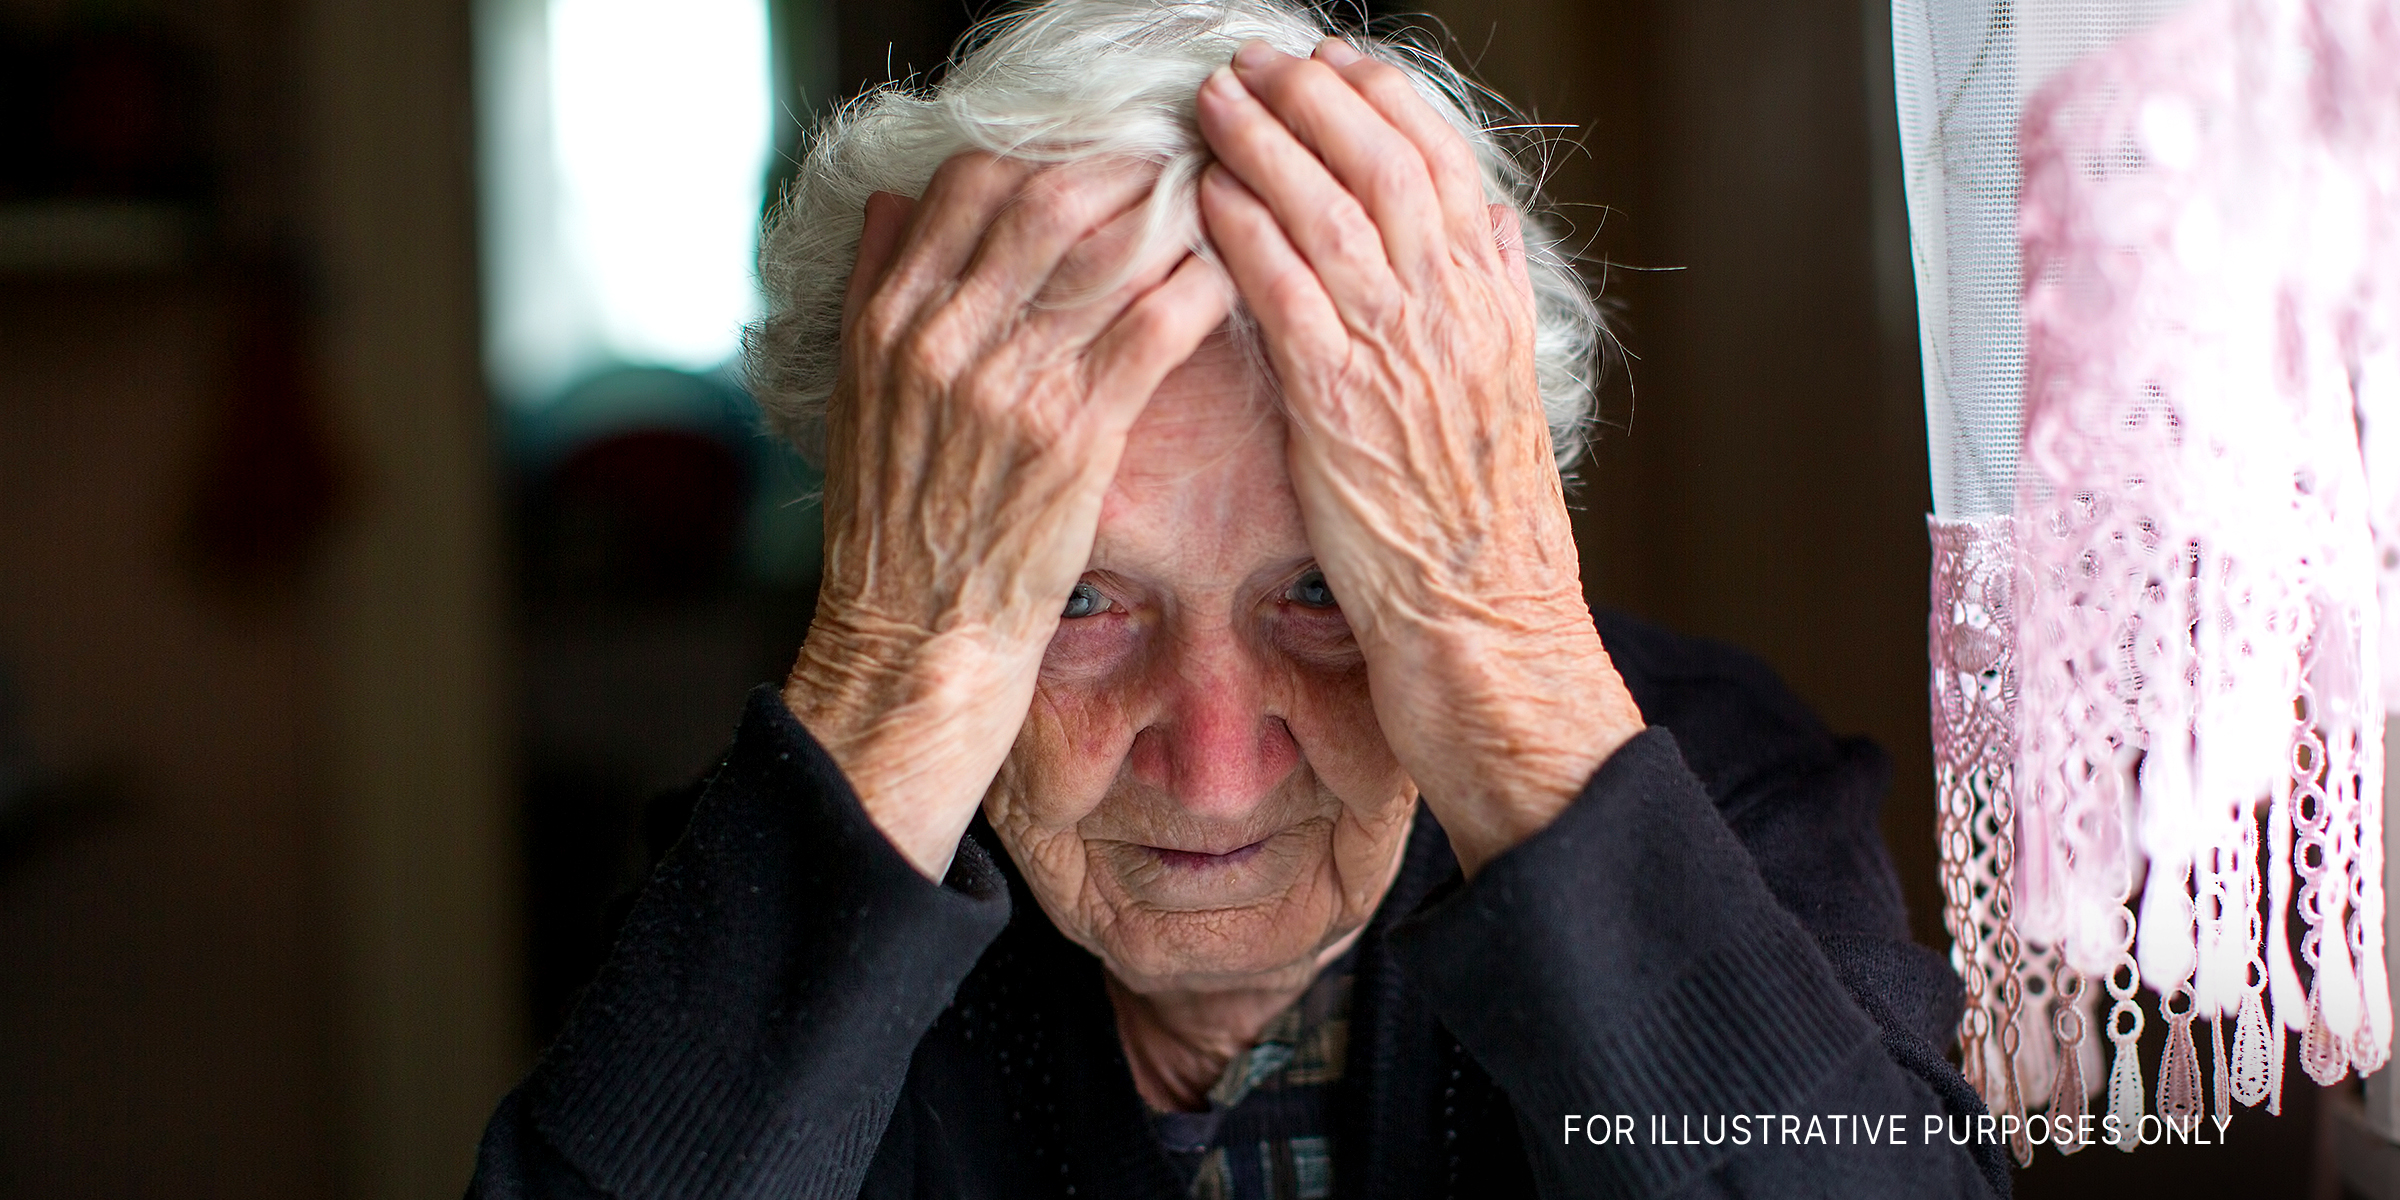 An older woman in distress | Source: Shutterstock